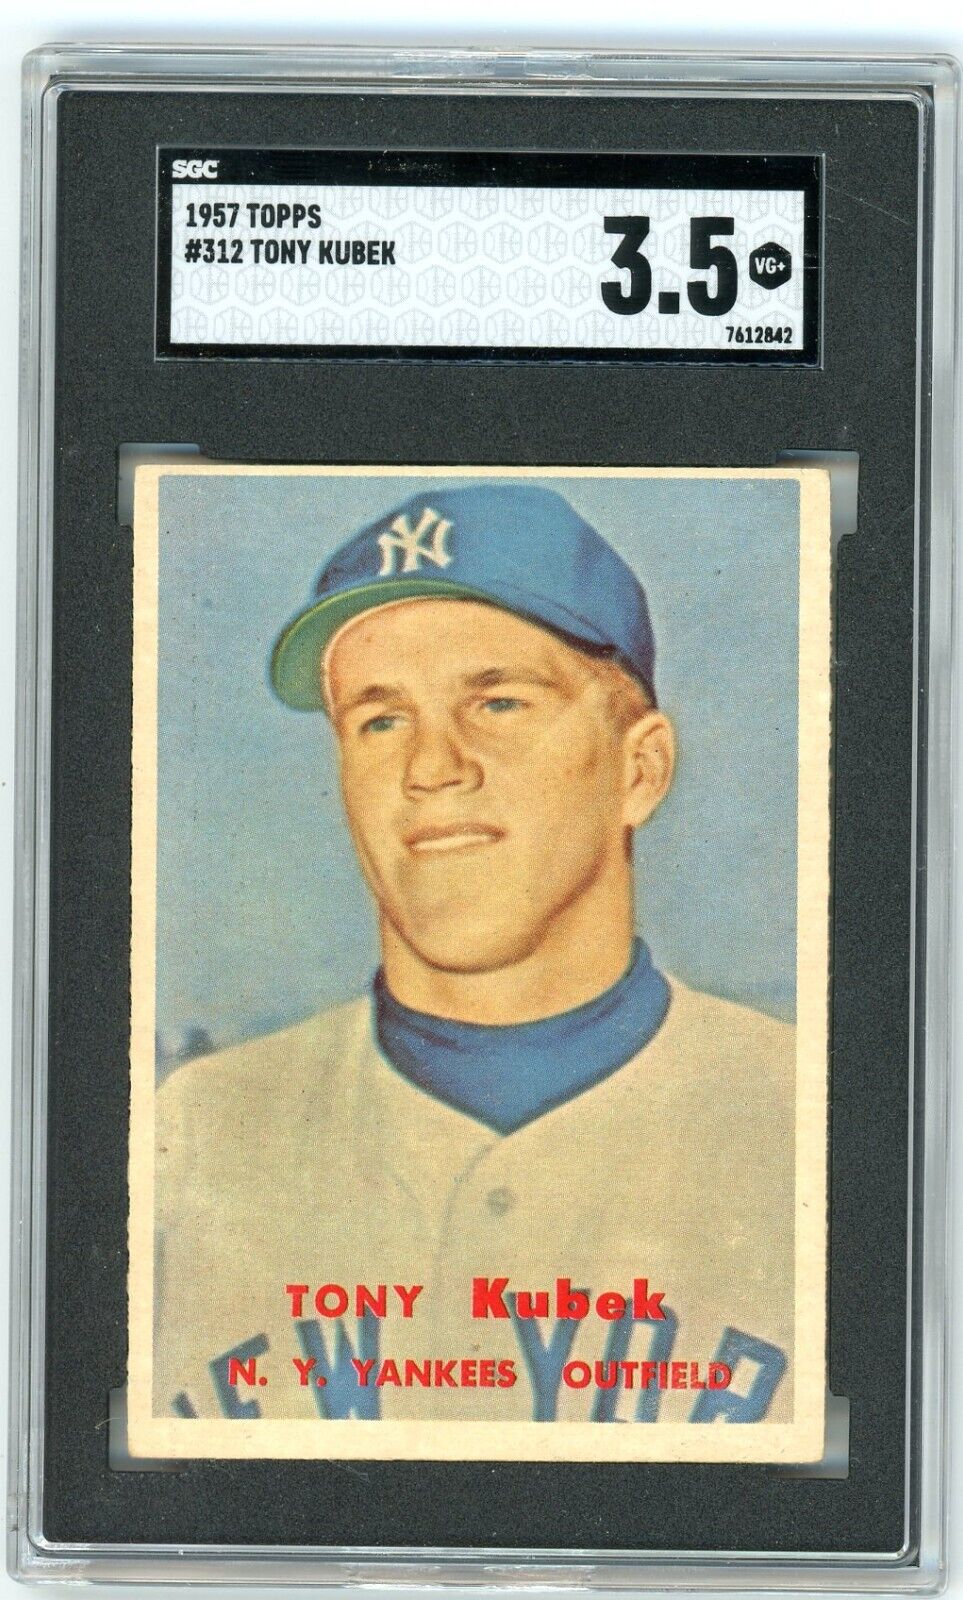 1957 Topps TONY KUBEK ROOKIE Yankees #312 SGC 3.5 VG+ Condition